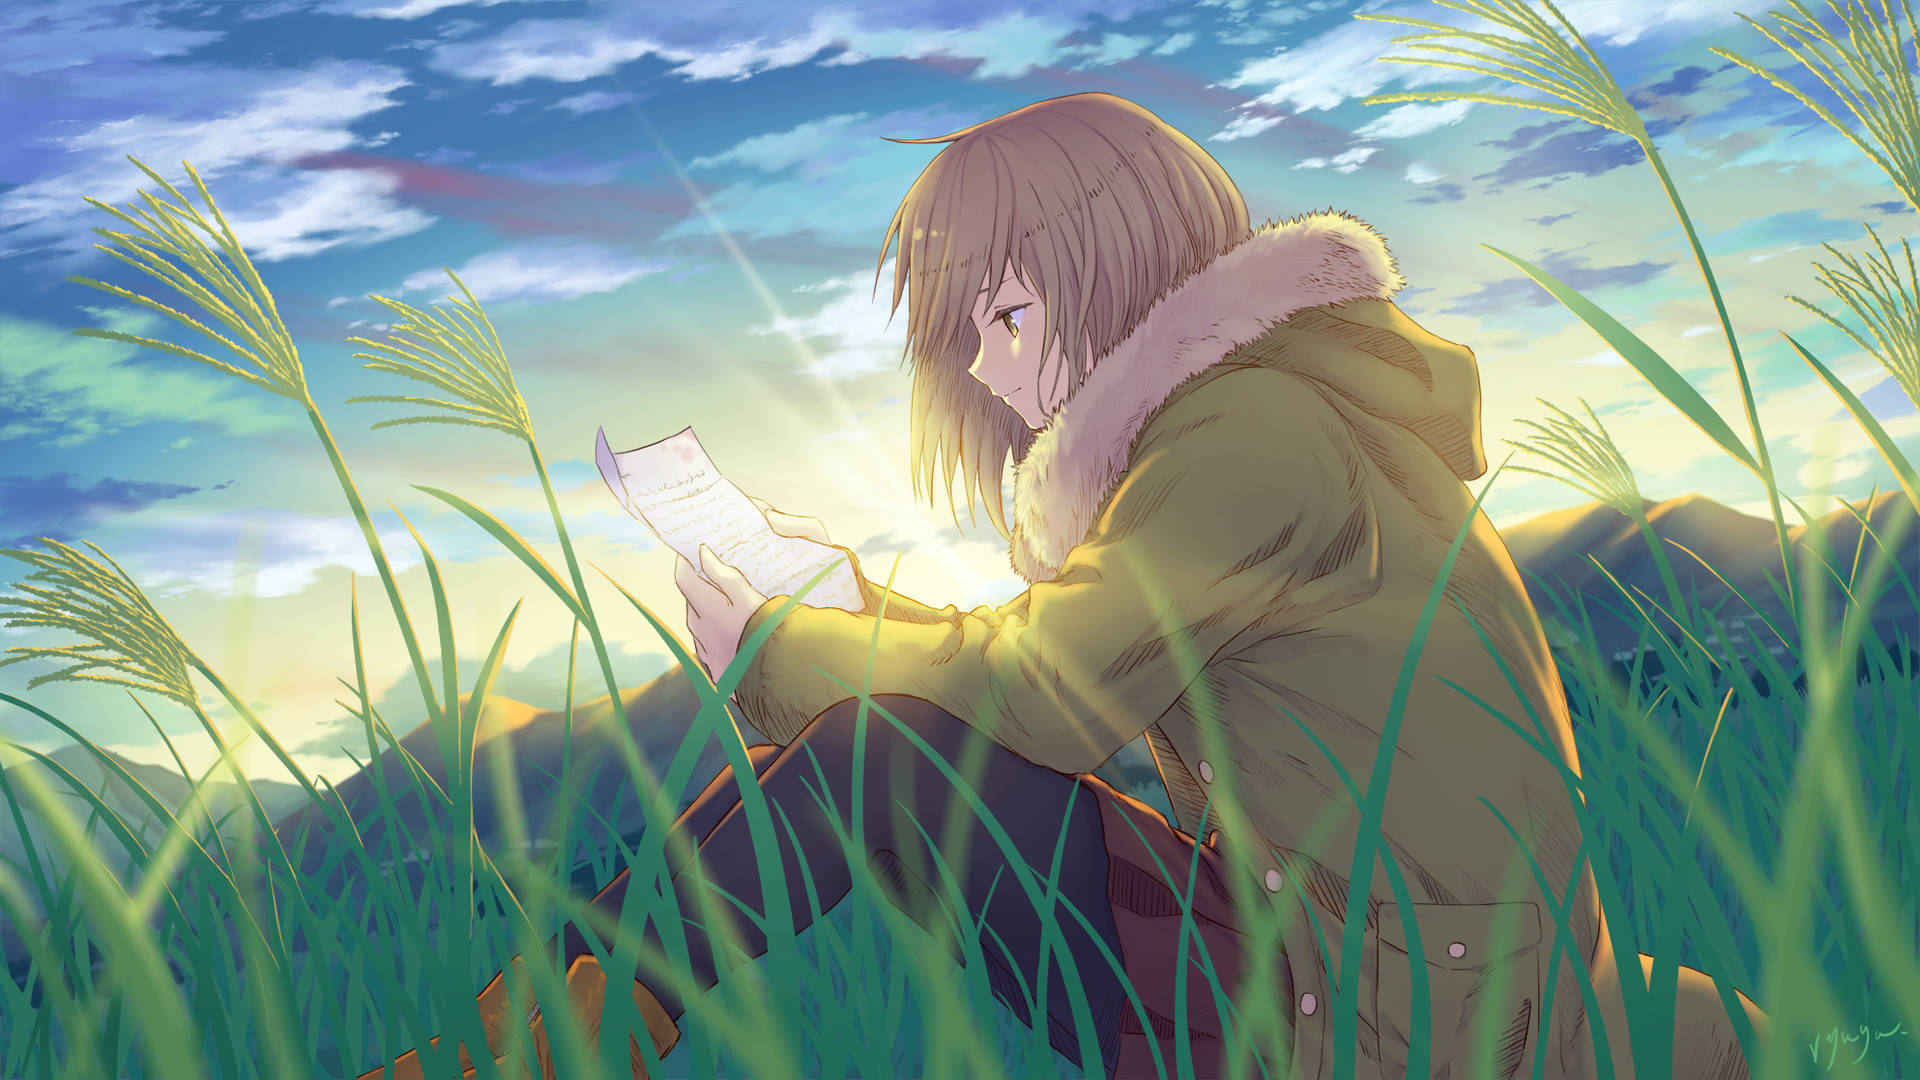 Anime Girl Reading Book In Grass